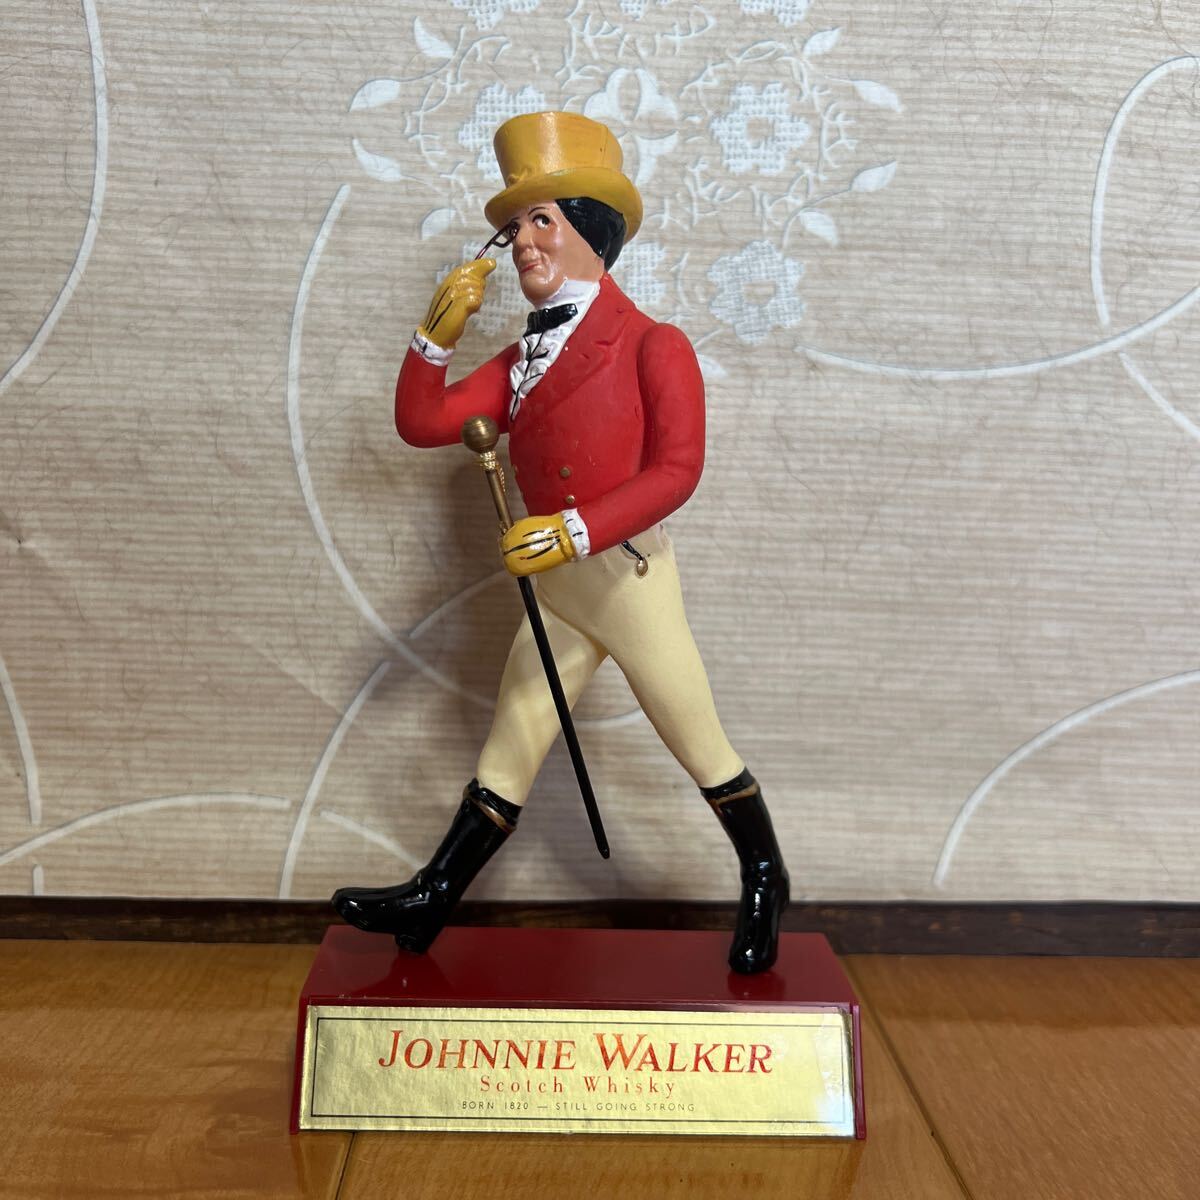 JOHNNIE WALKER ジョニーウォーカー スコッチ ウイスキー 置物 人形 フィギュア ビンテージ 中古の画像1